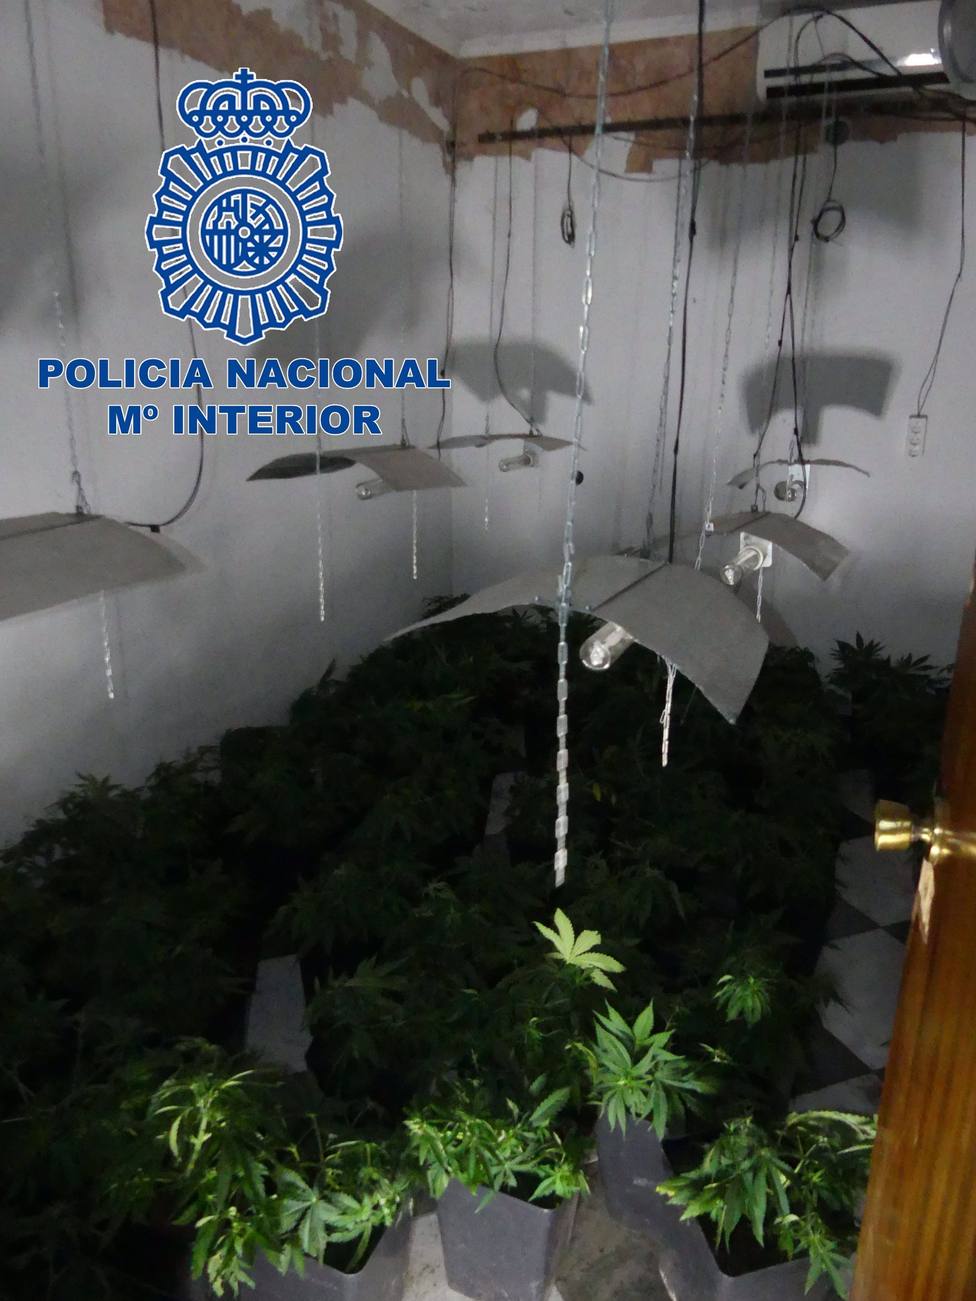 PlantaciÃ³n de marihuana en una vivienda ocupada de Badajoz